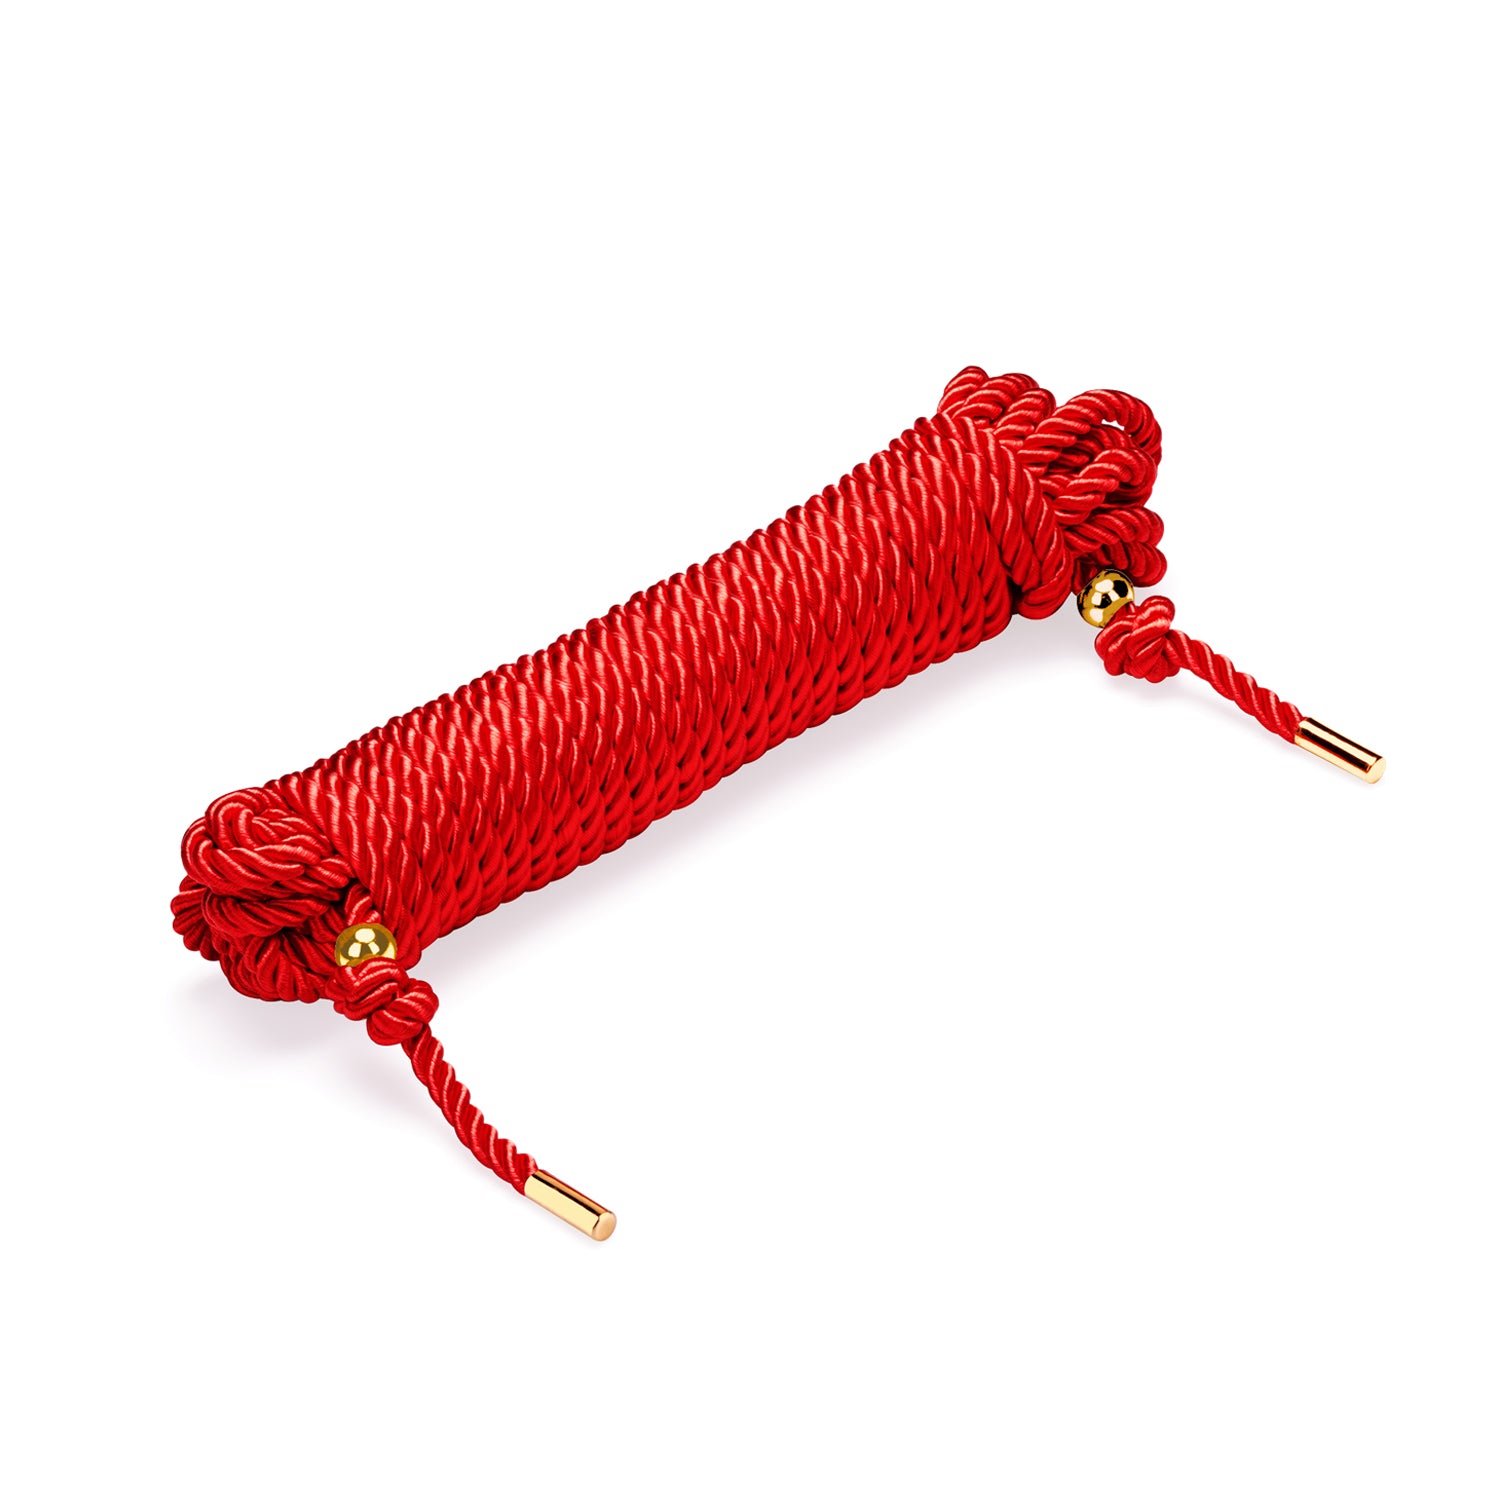 Red Shibari Bondage Rope Sily Cotton 10m